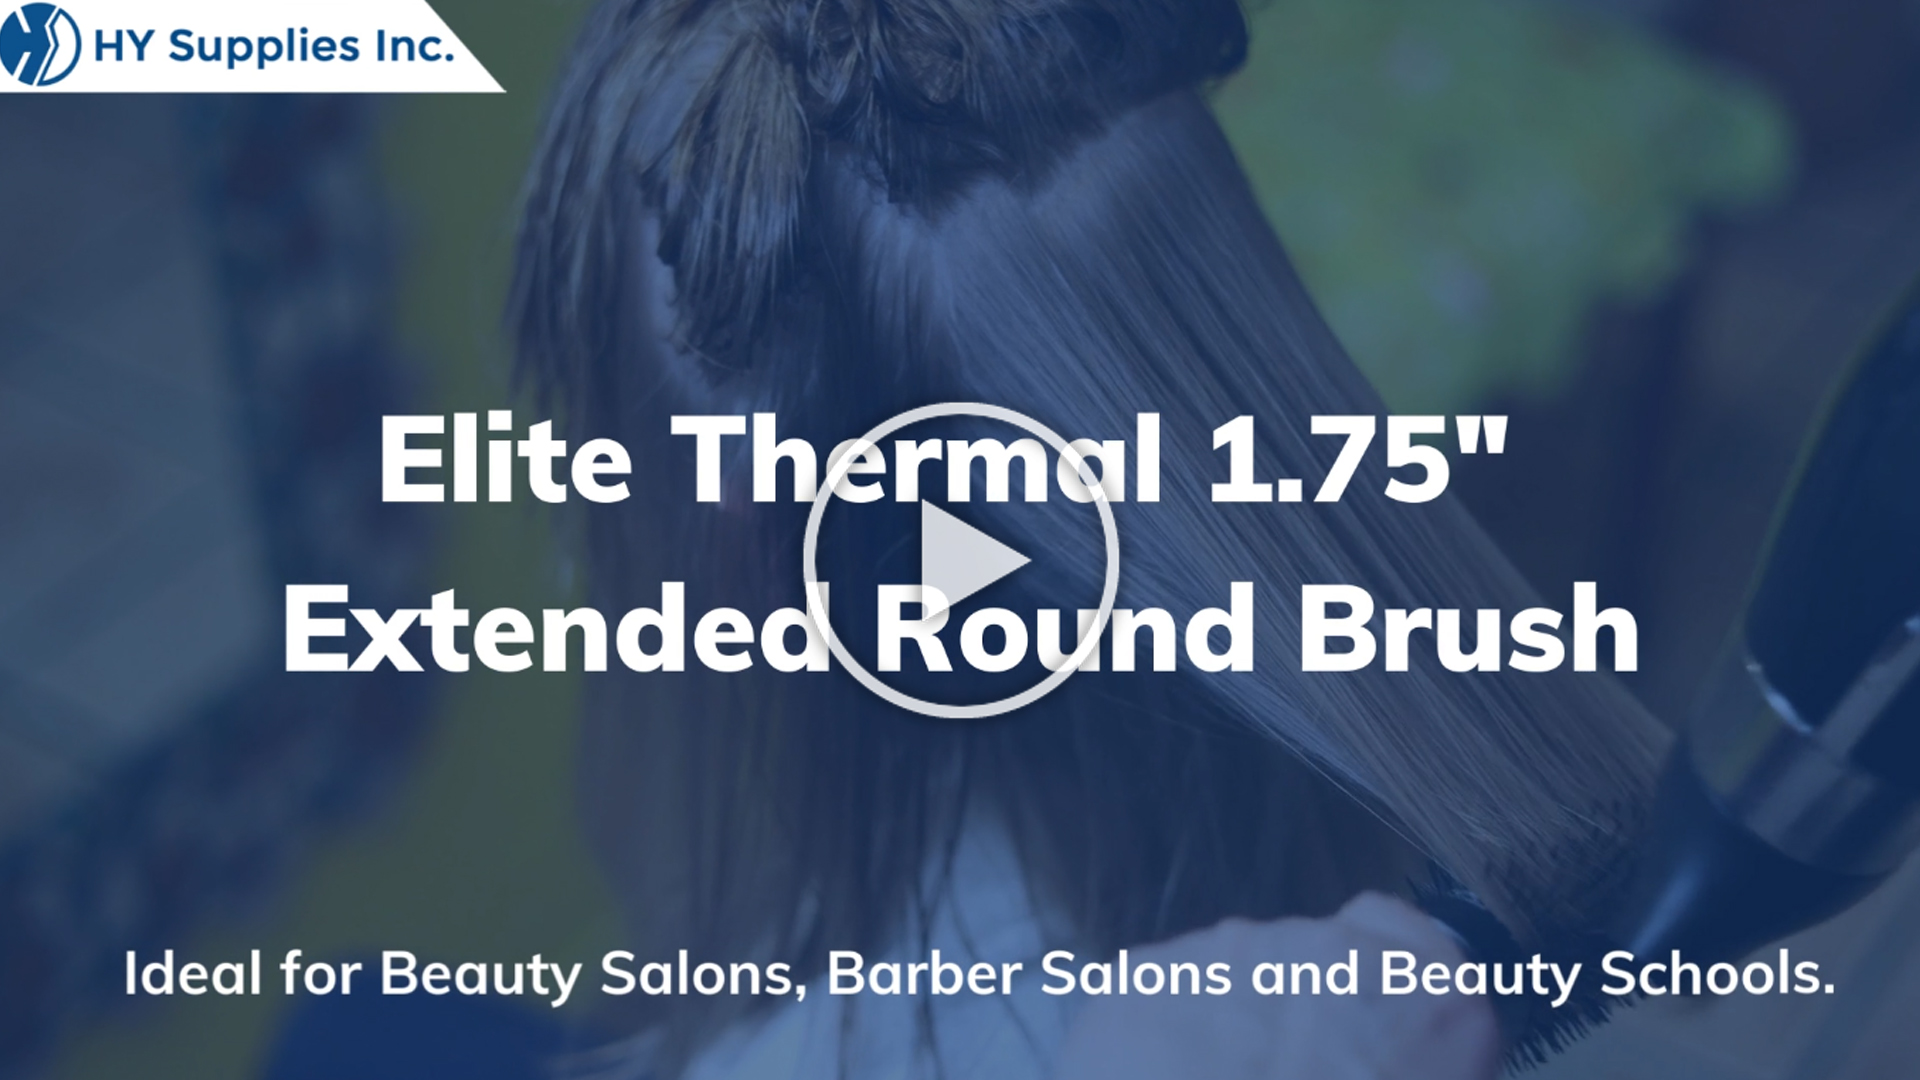 Elite Thermal 1.75 Extended Round Brush